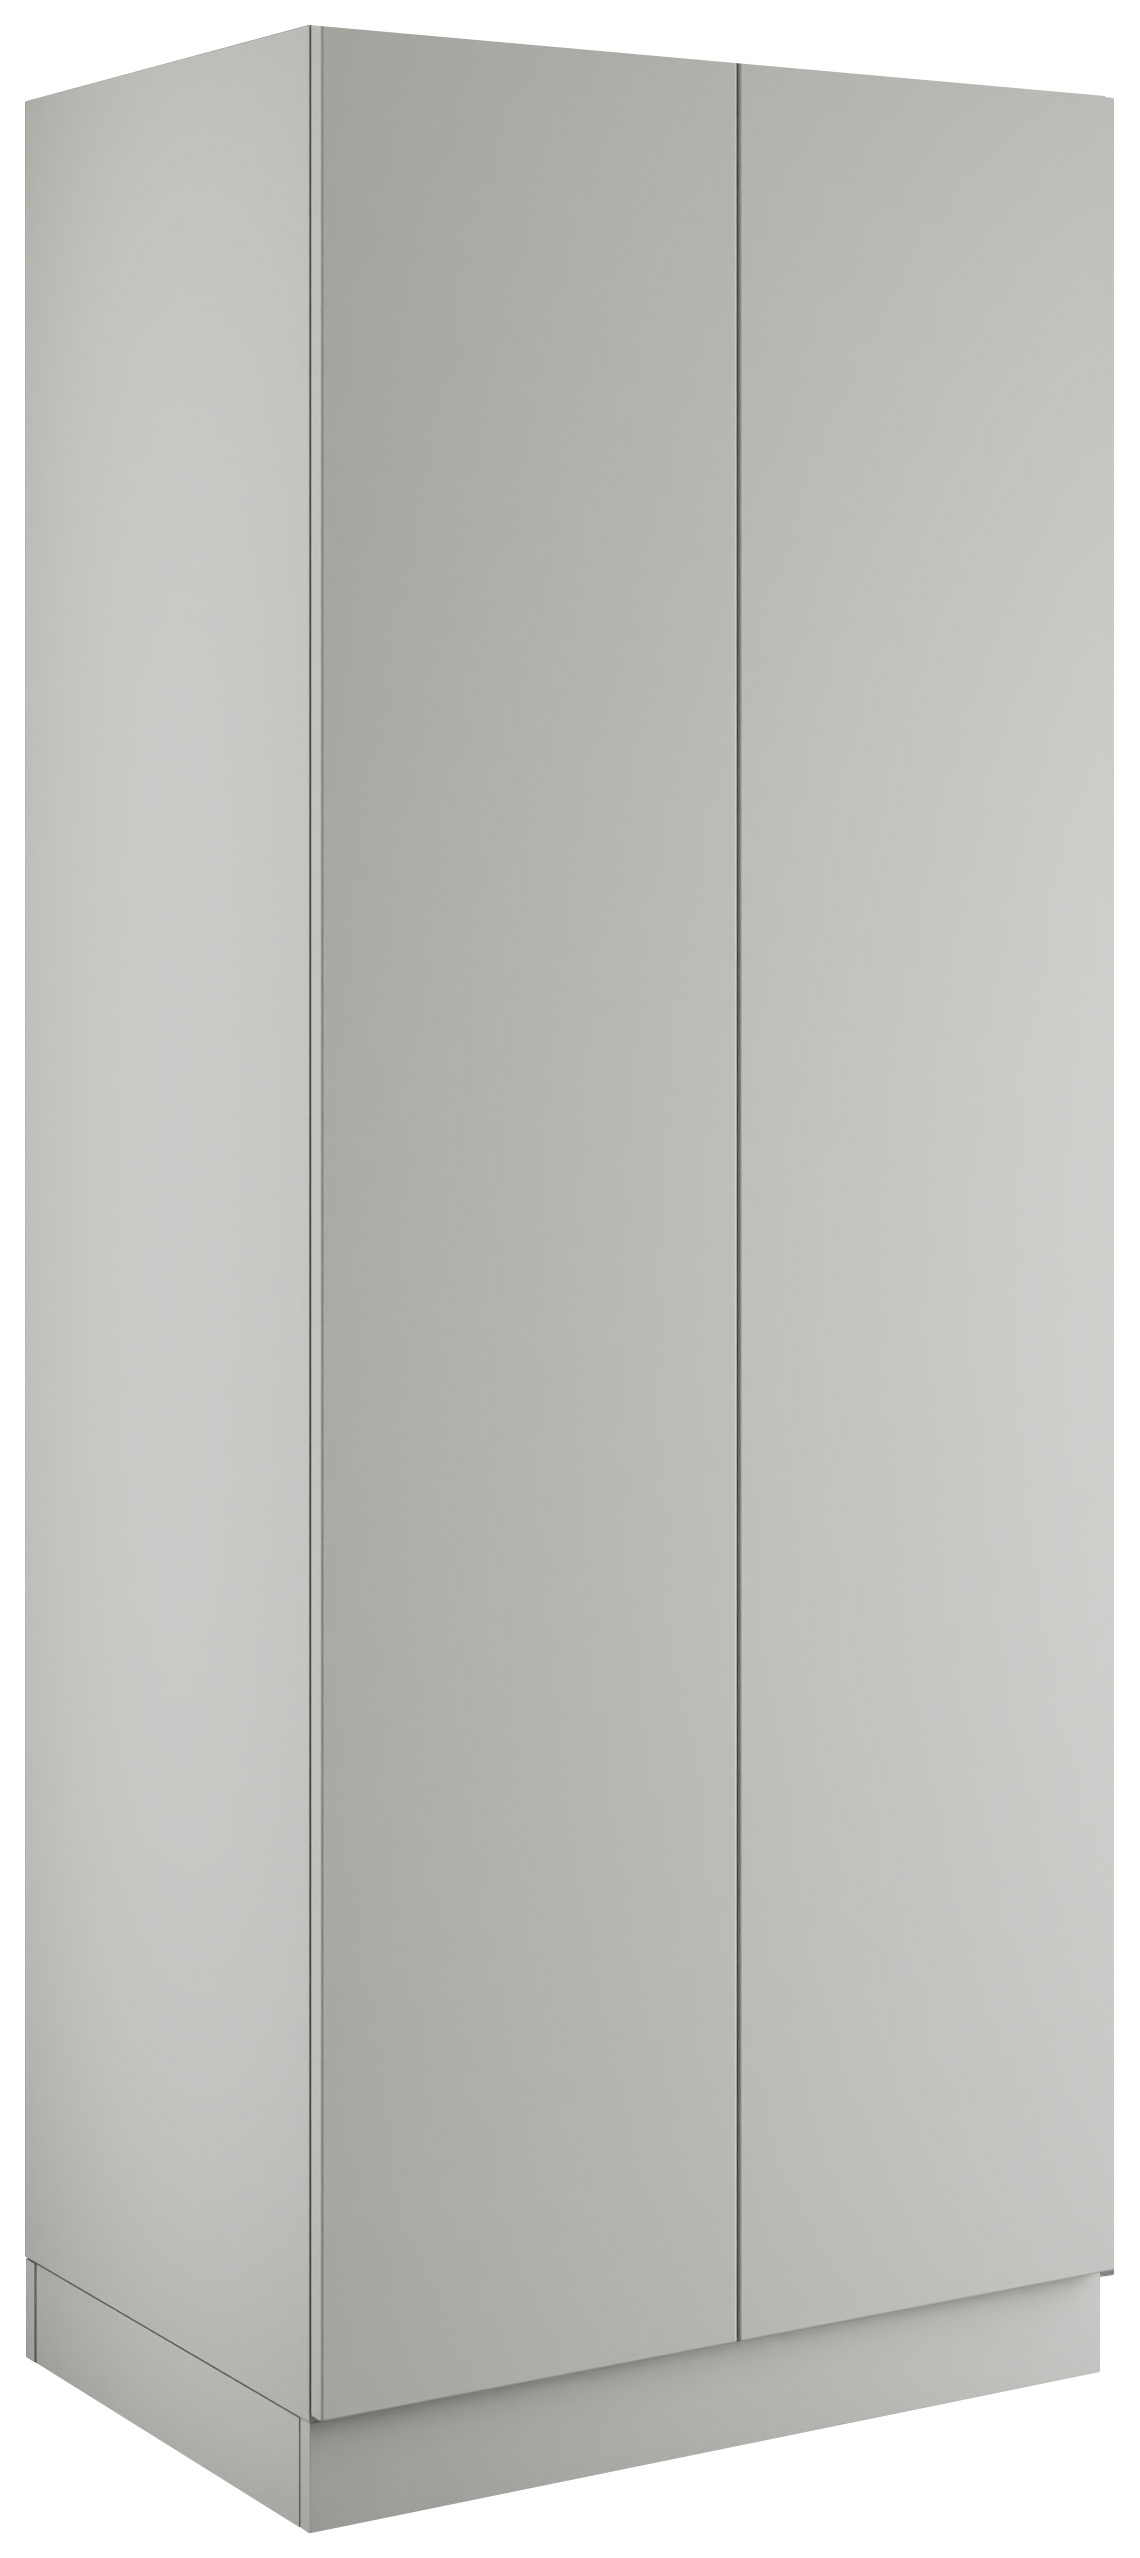 Malton Light Grey Double Wardrobe with Double Rail - 900 x 2260 x 608mm